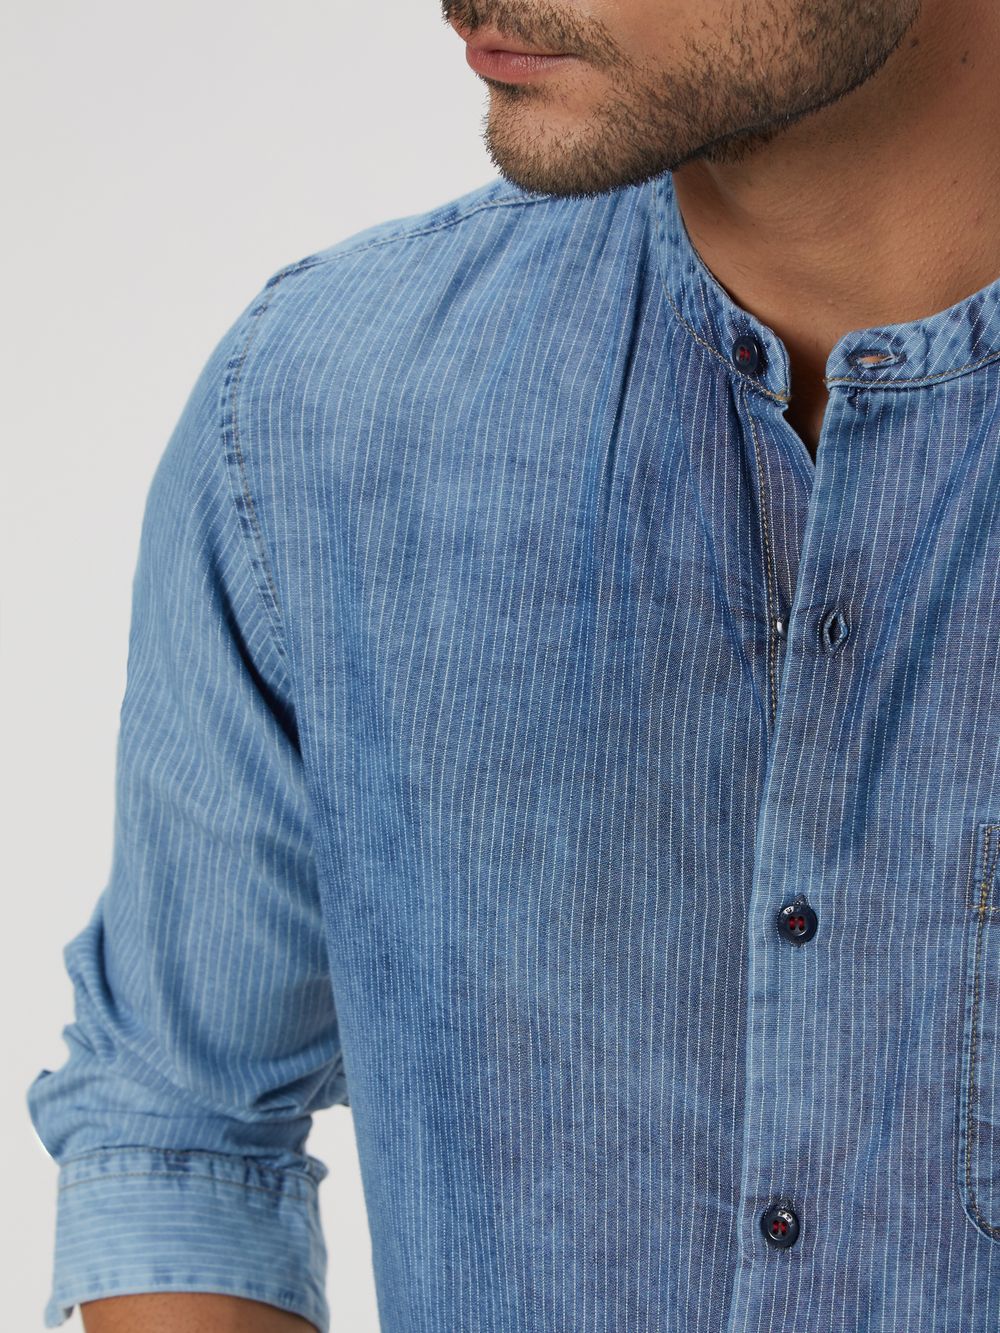 Indigo Blue Pin Stripe Shirt